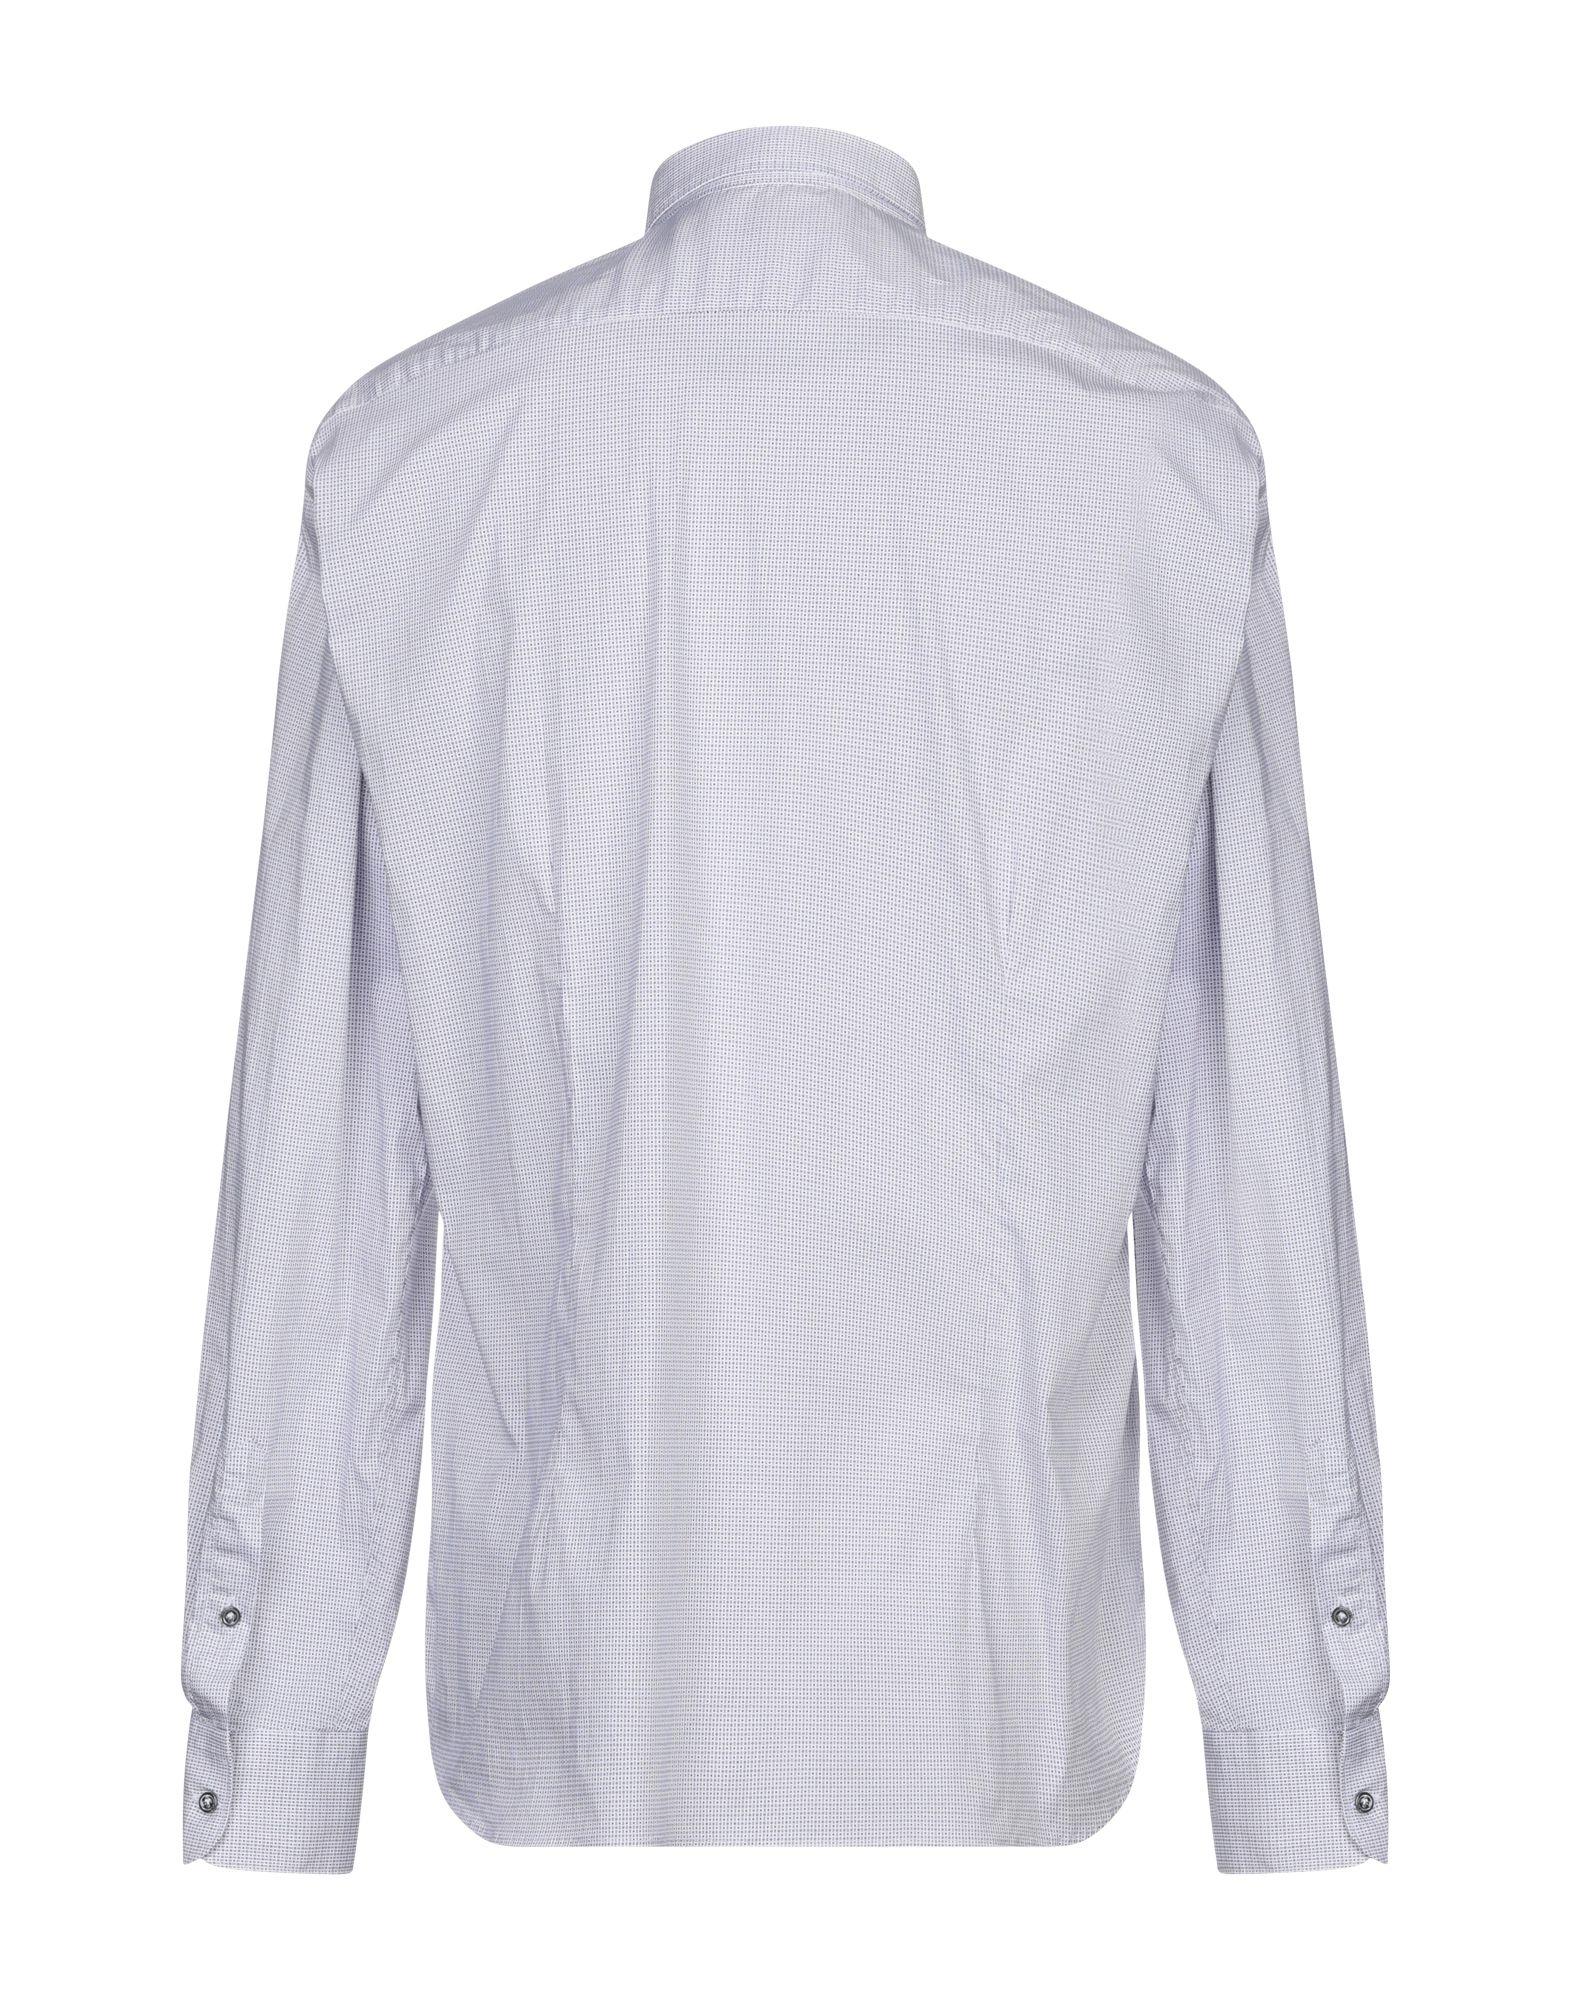 Aglini Cotton Shirt in Light Grey (Gray) for Men - Lyst